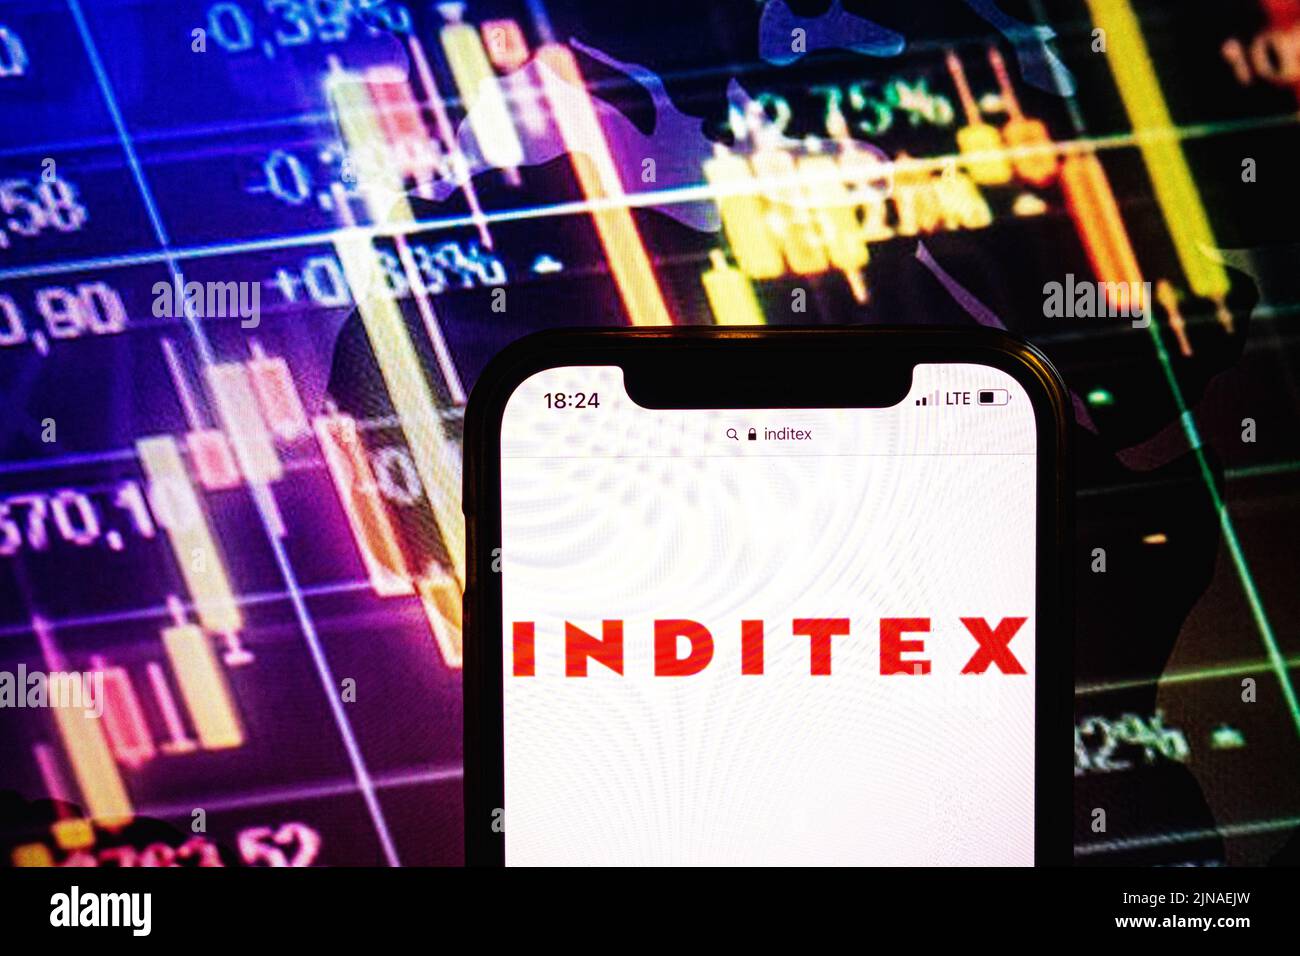 KONSKIE, POLAND - August 09, 2022: Smartphone displaying logo of Inditex company on stock exchange diagram background Stock Photo